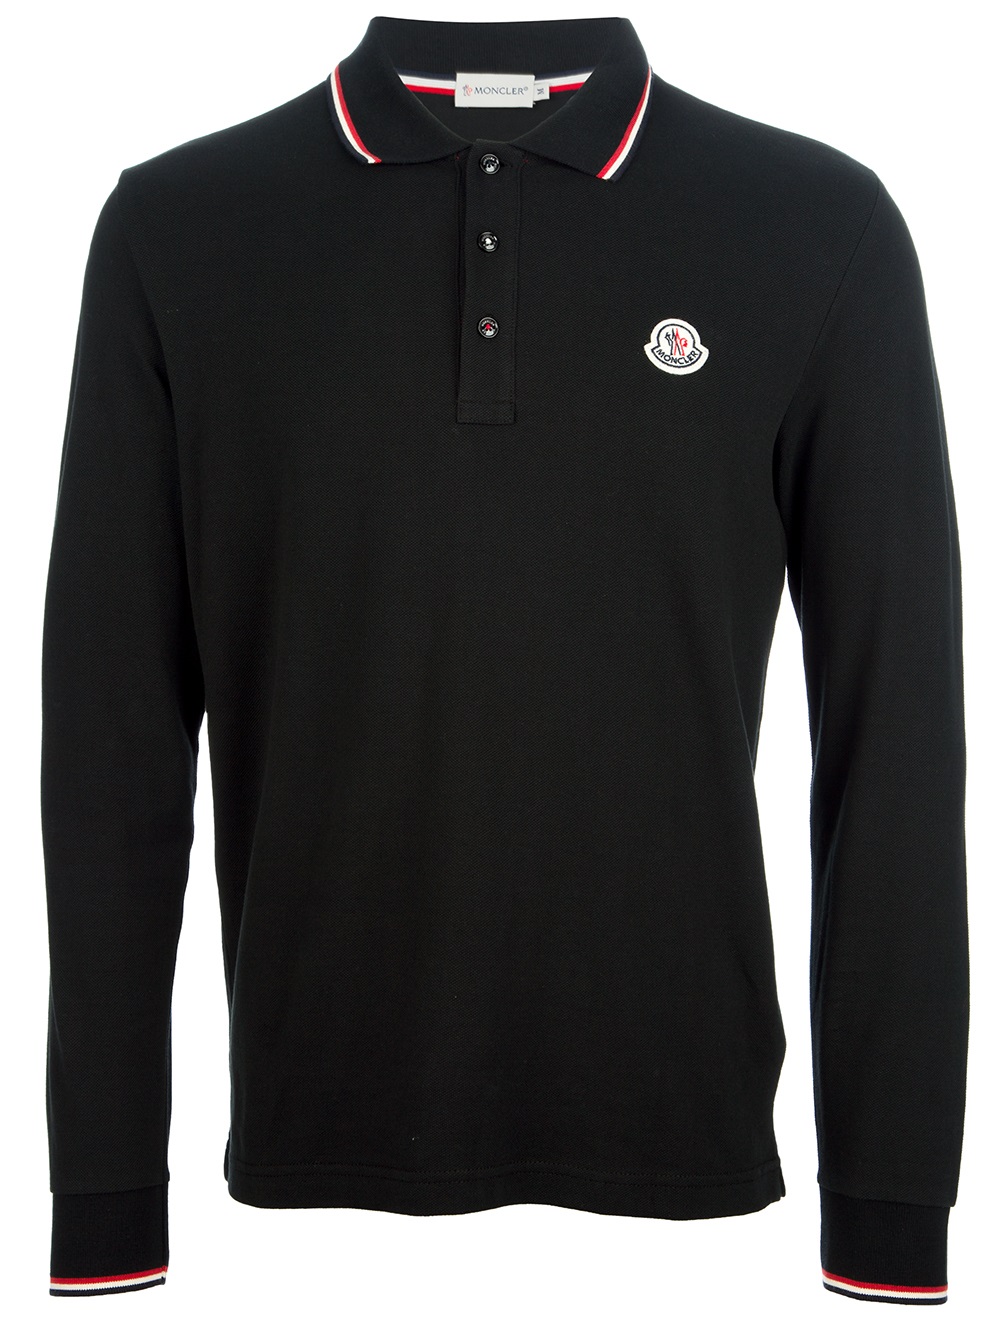 Lyst - Moncler Long Sleeve Polo Shirt in Black for Men